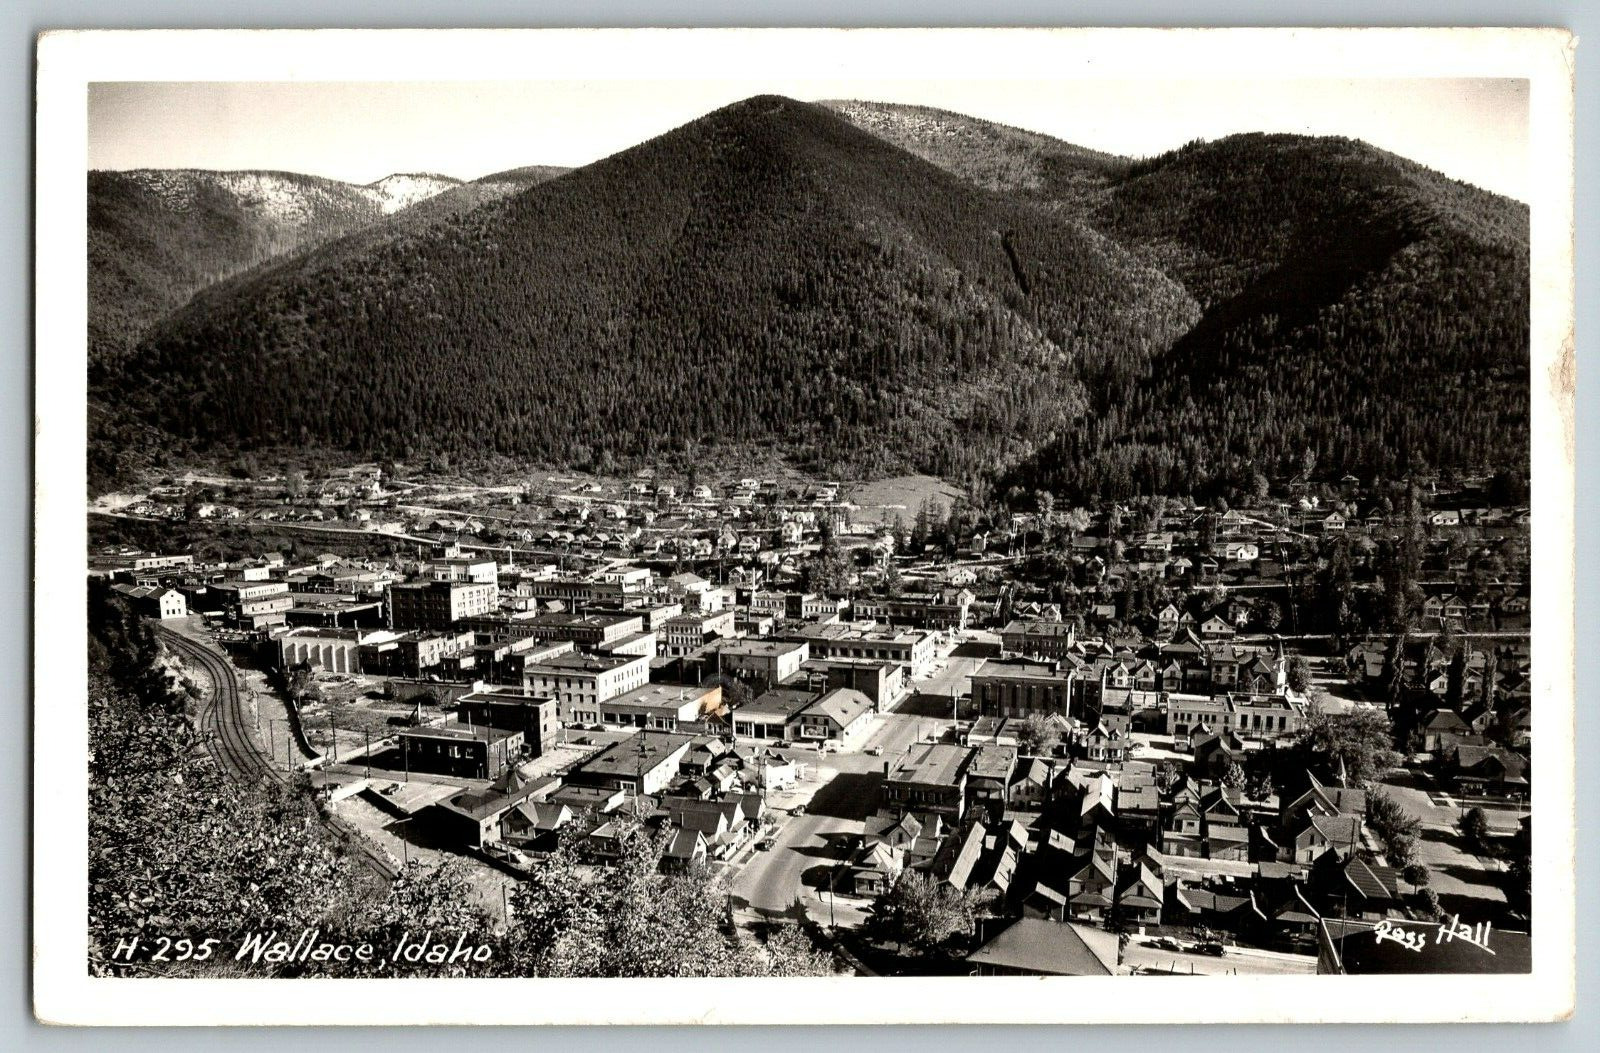 RPPC Vintage Postcard - Wallace, Idaho - Looking East 1905-1915 - Real Photo